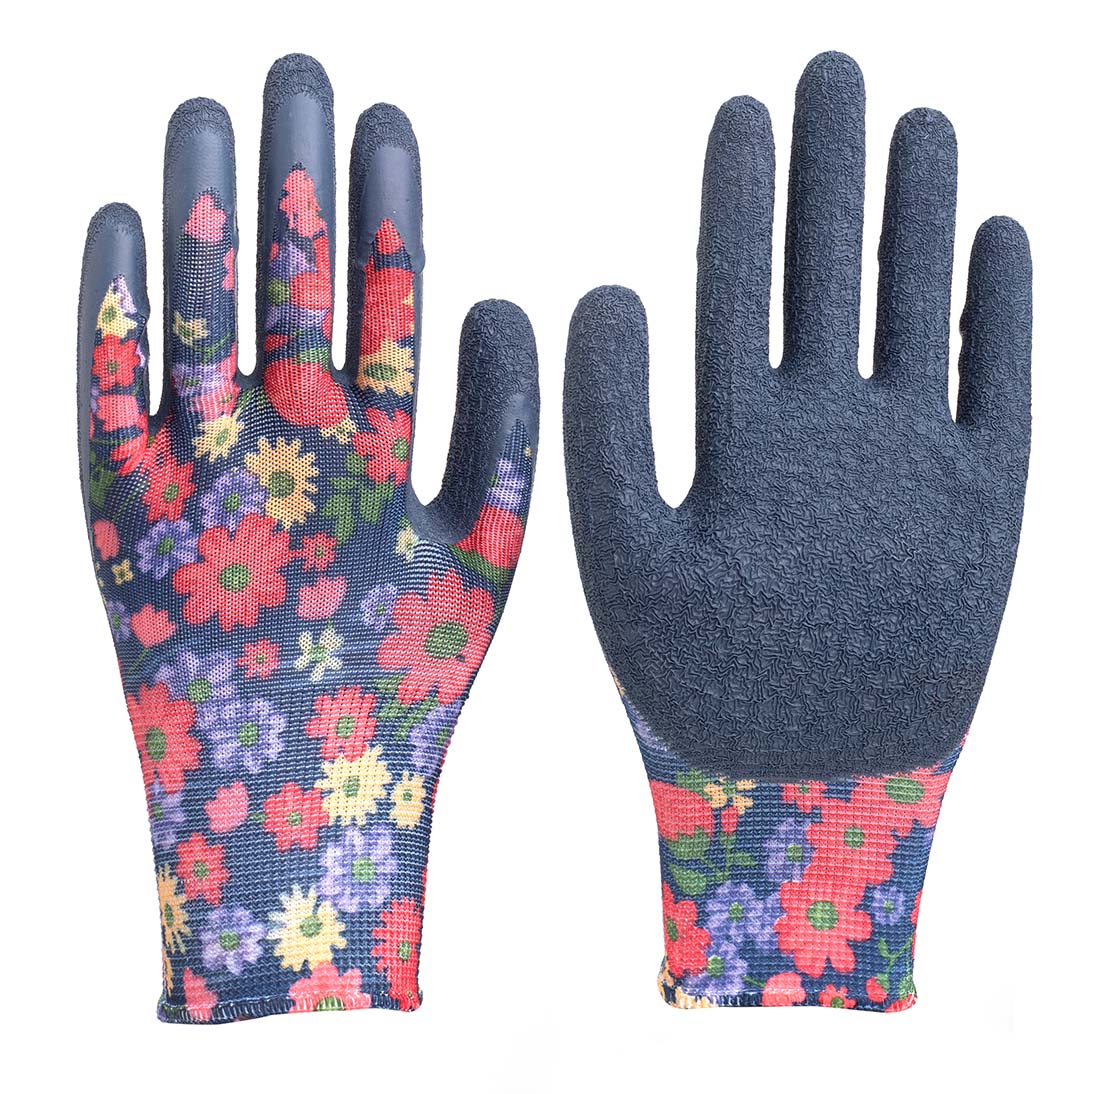 13G printed polyester garden glove